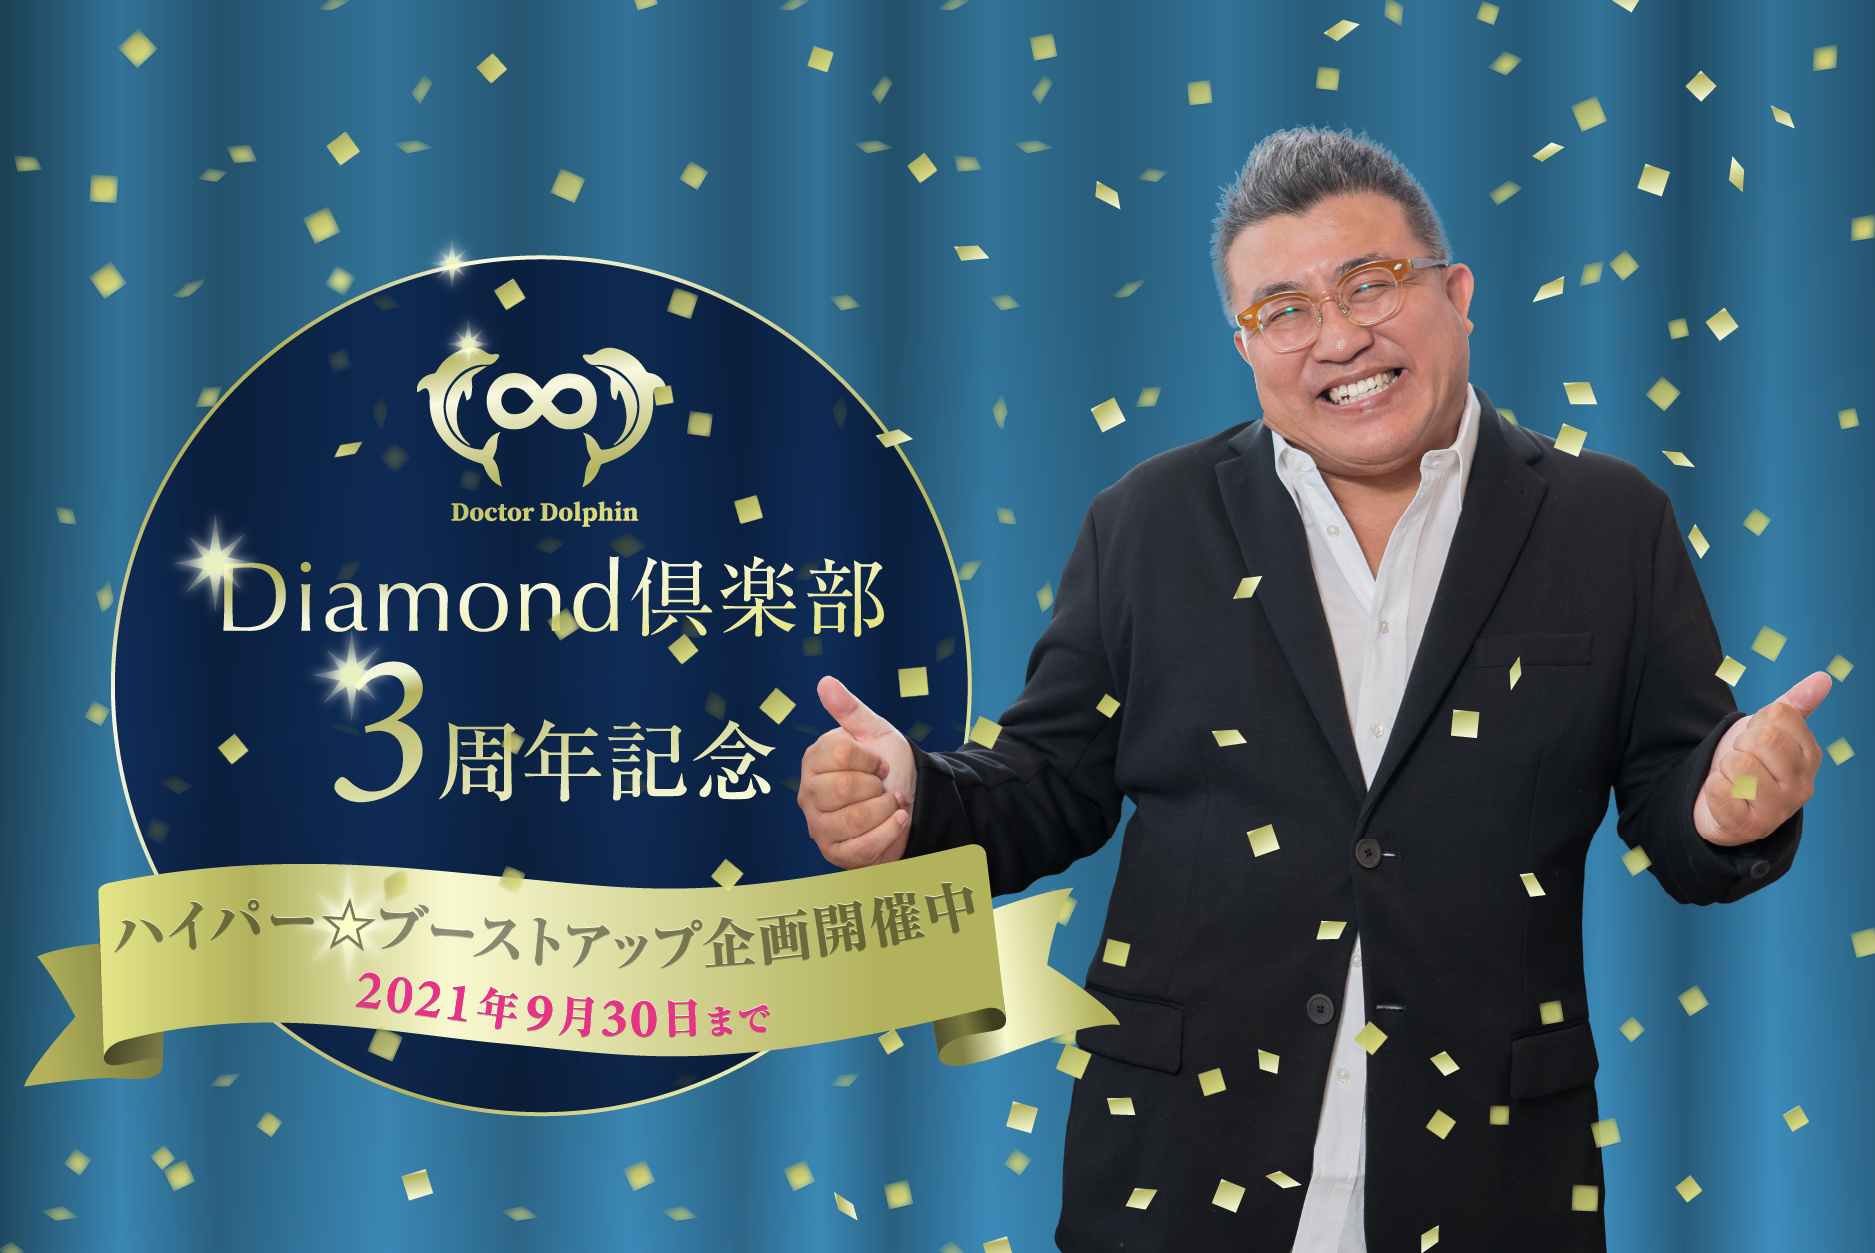 Diamond倶楽部3周年企画